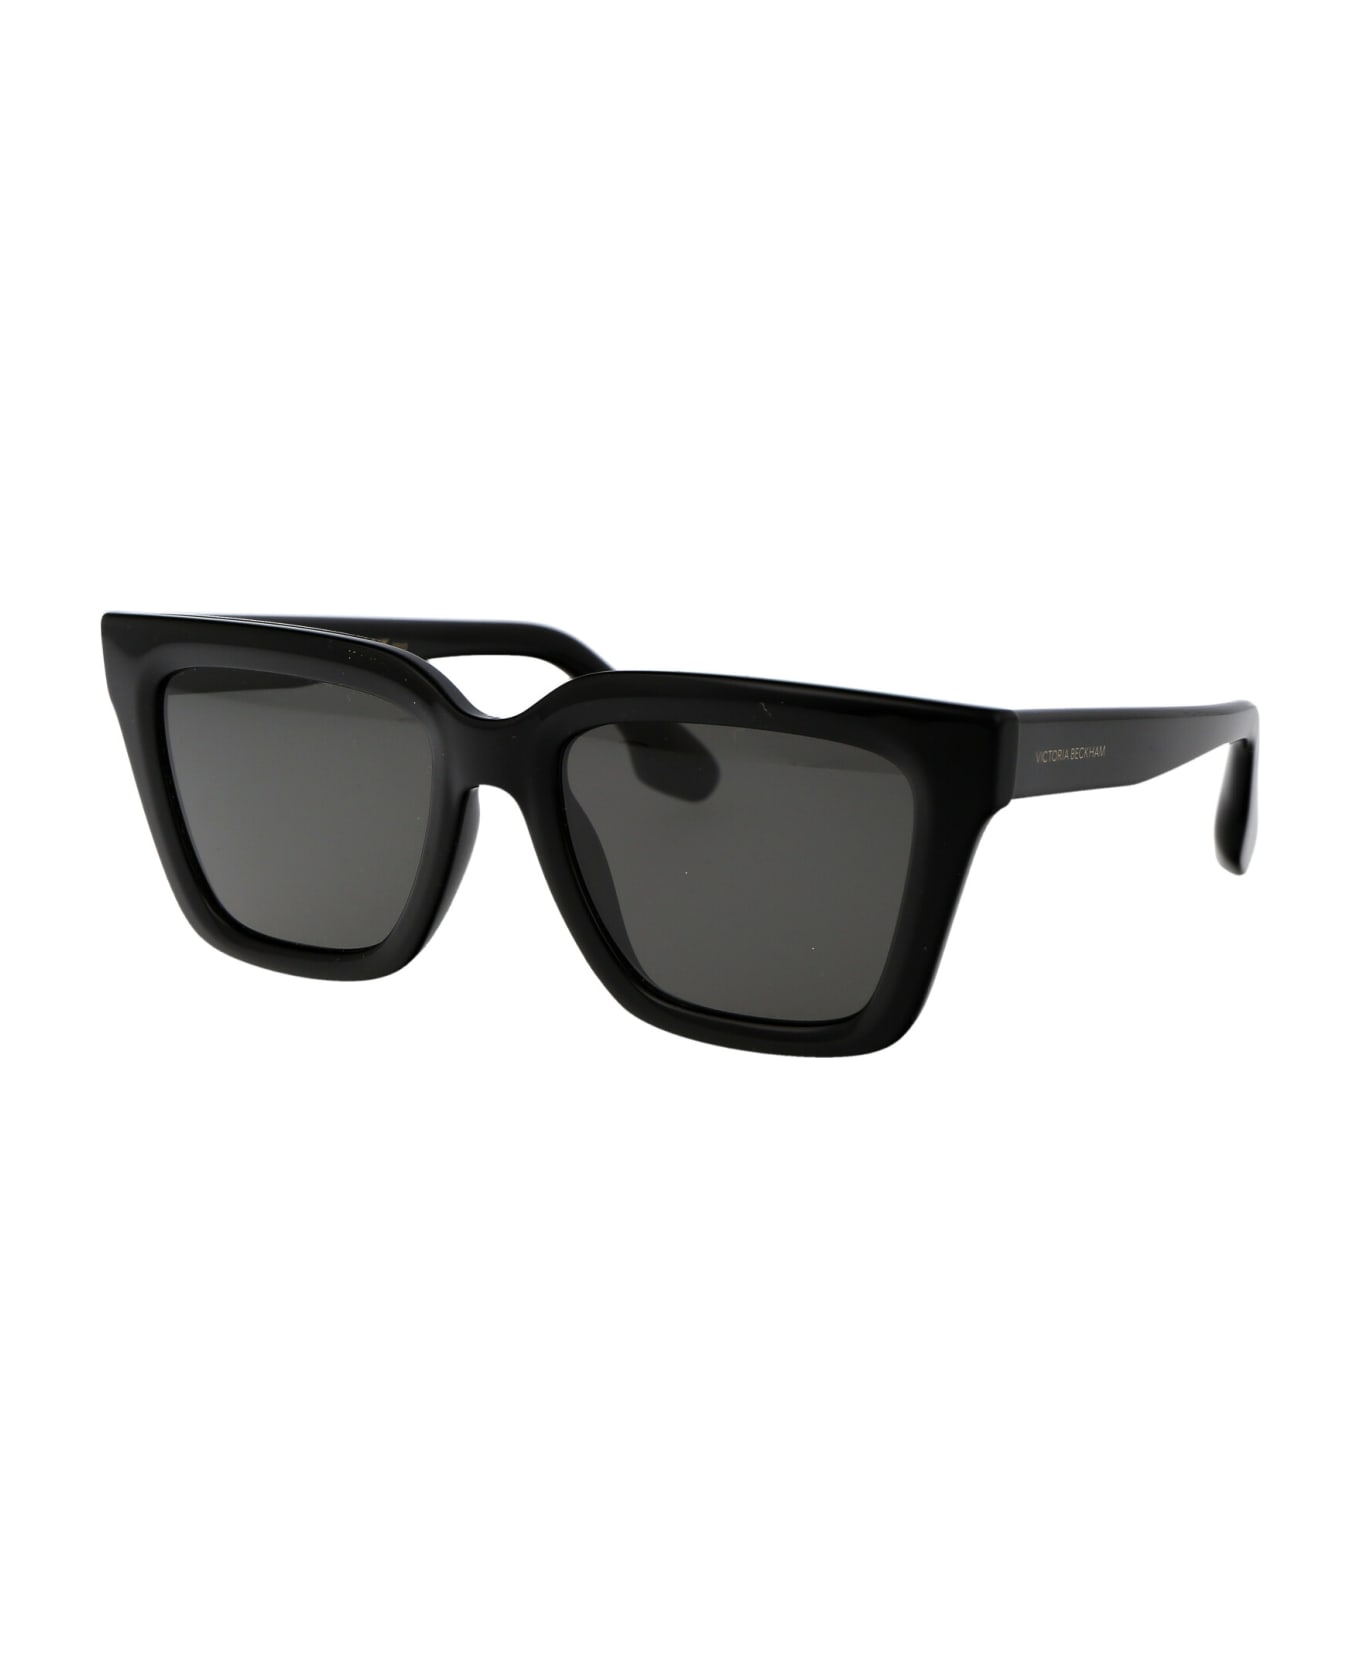 Victoria Beckham Vb644s Sunglasses - 001 BLACK サングラス